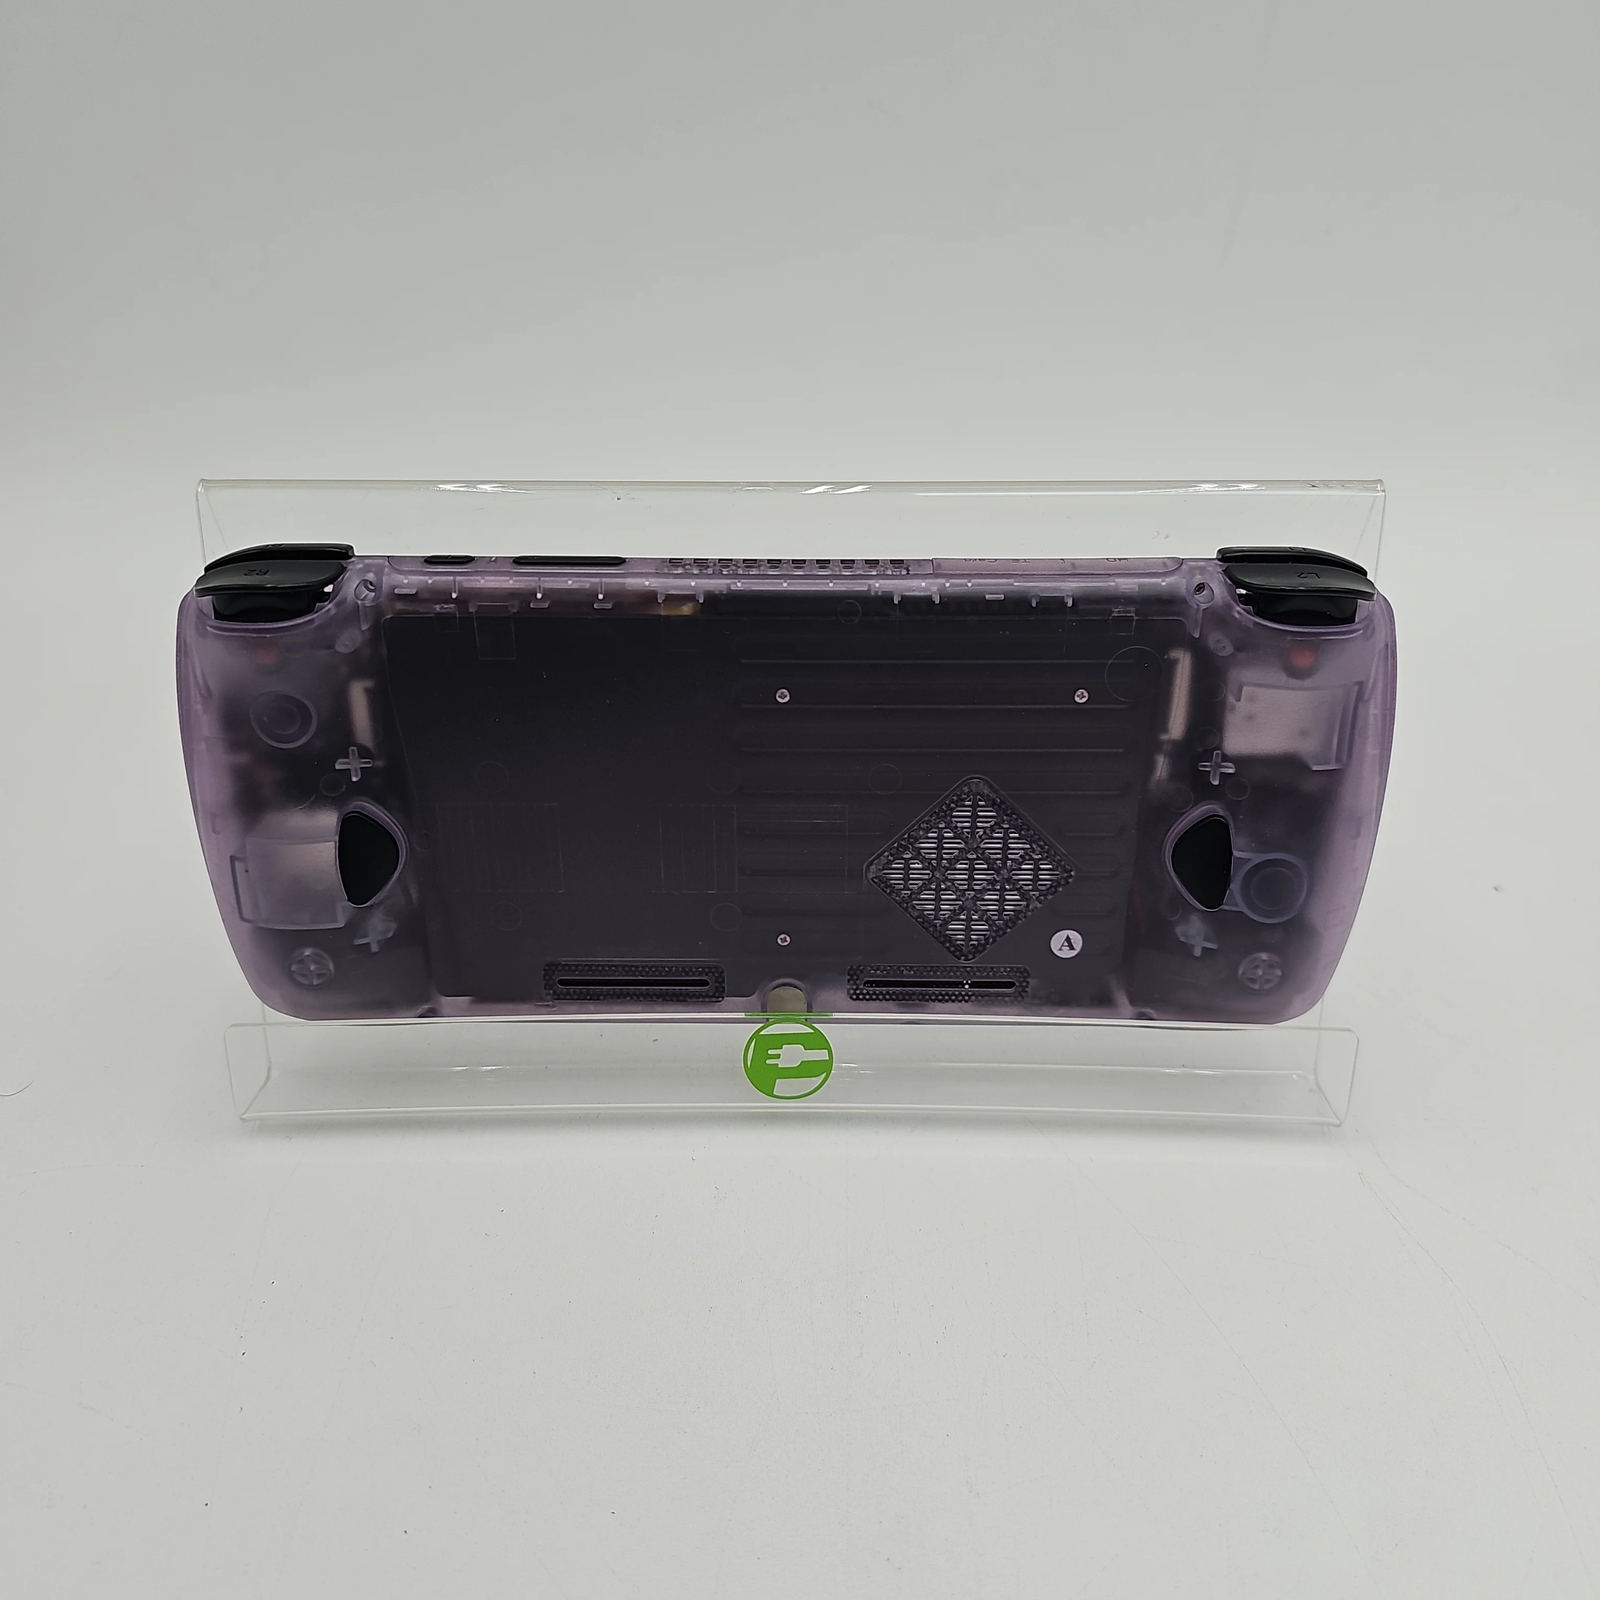 AYN Odin Pro Model 8GB Ram 128GB Storage Clear Purple Game Handheld Console